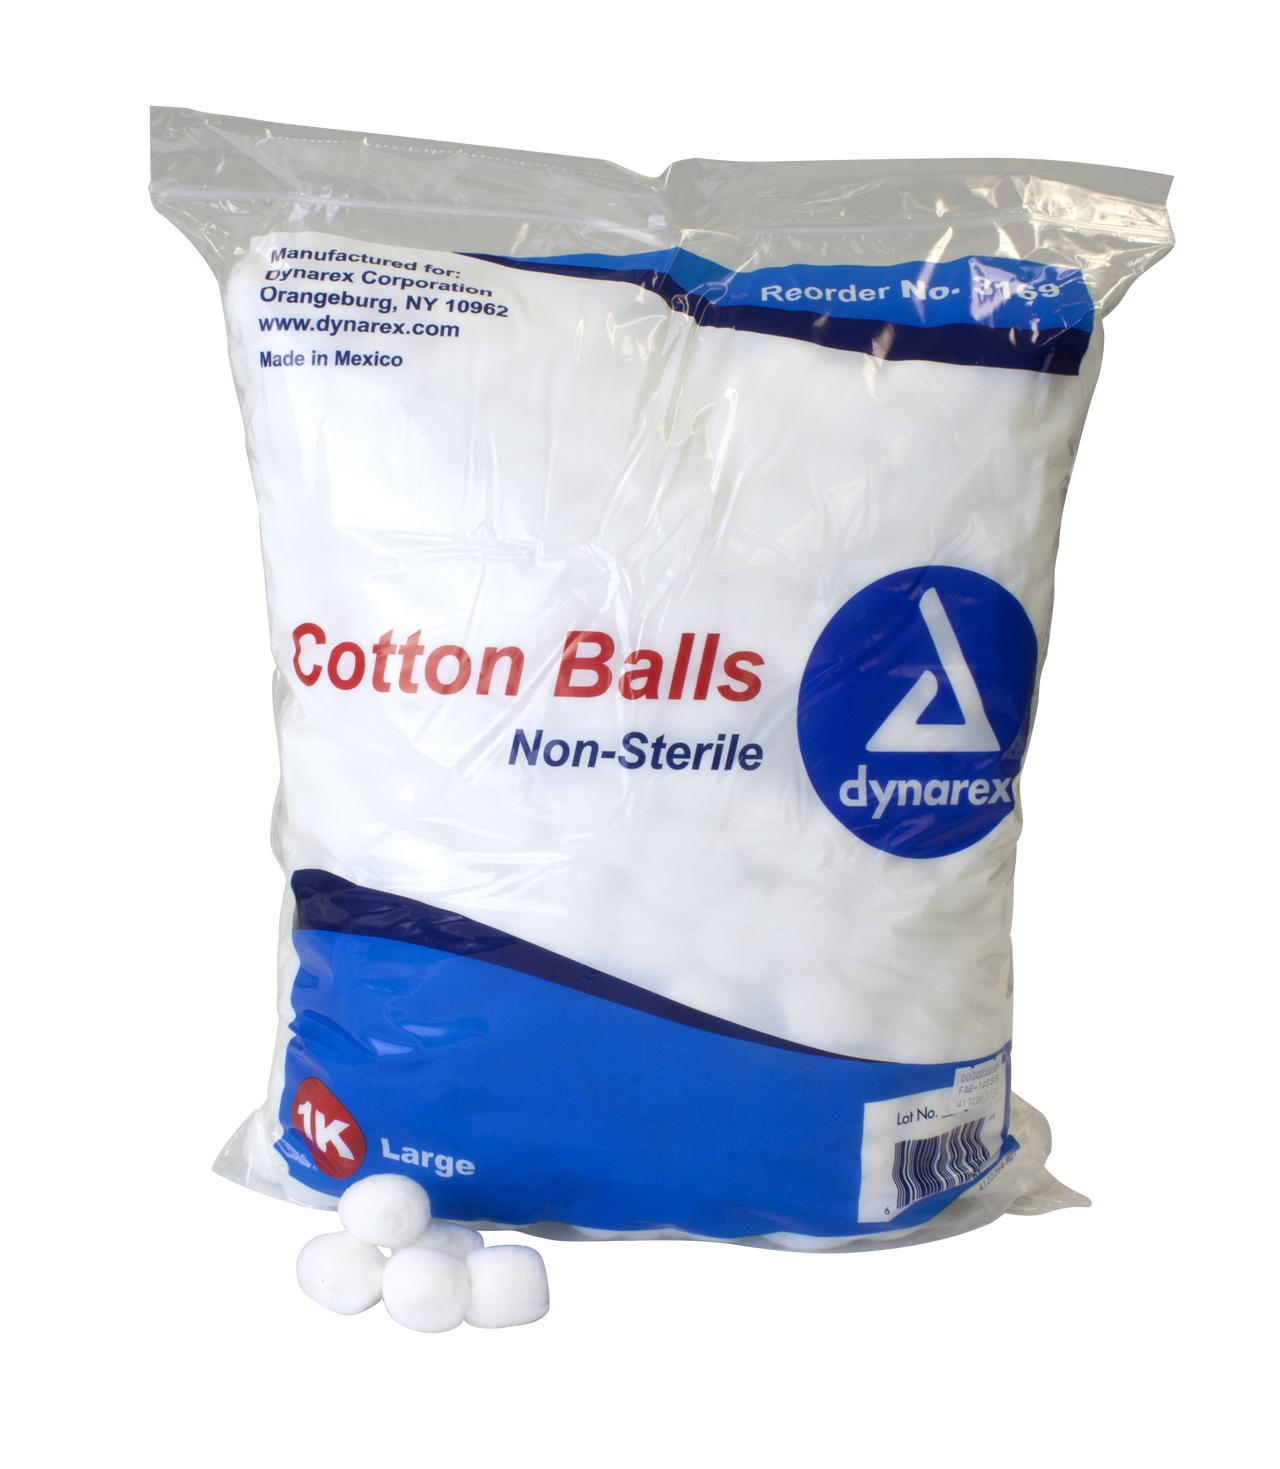 Dynarex Cotton Balls - For Skin Prepping & Wound Cleansing - Senior.com Cotton Balls